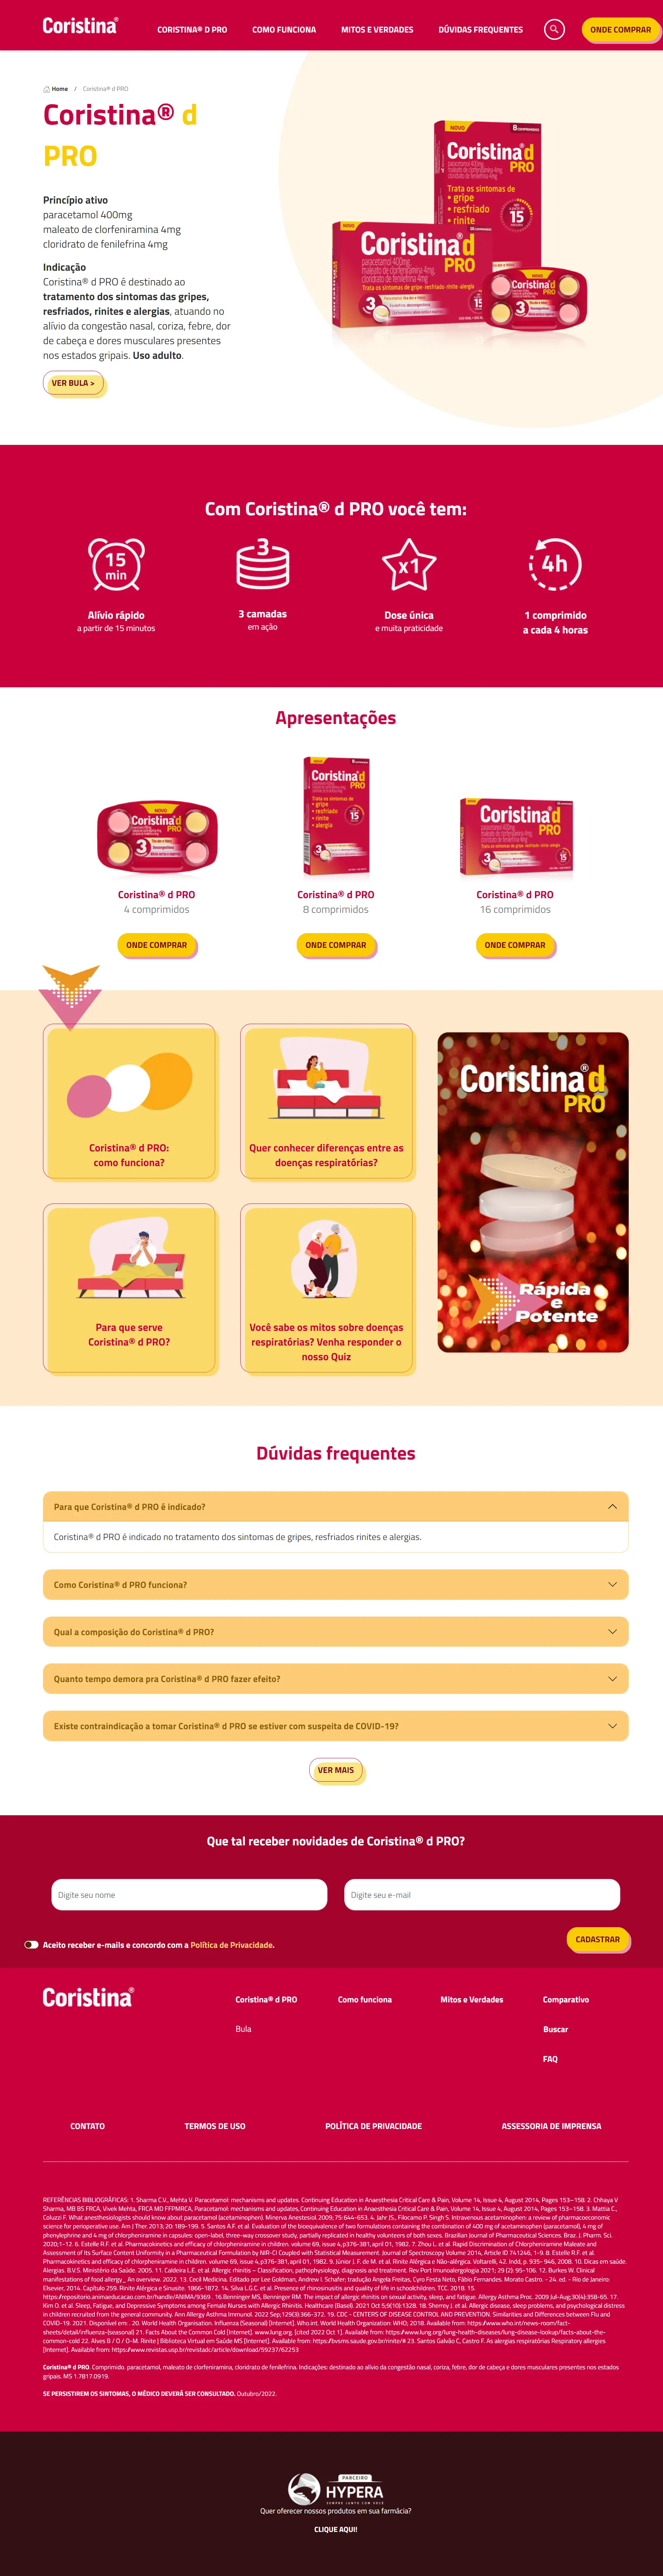 Screenshot image of Coristina D product page.